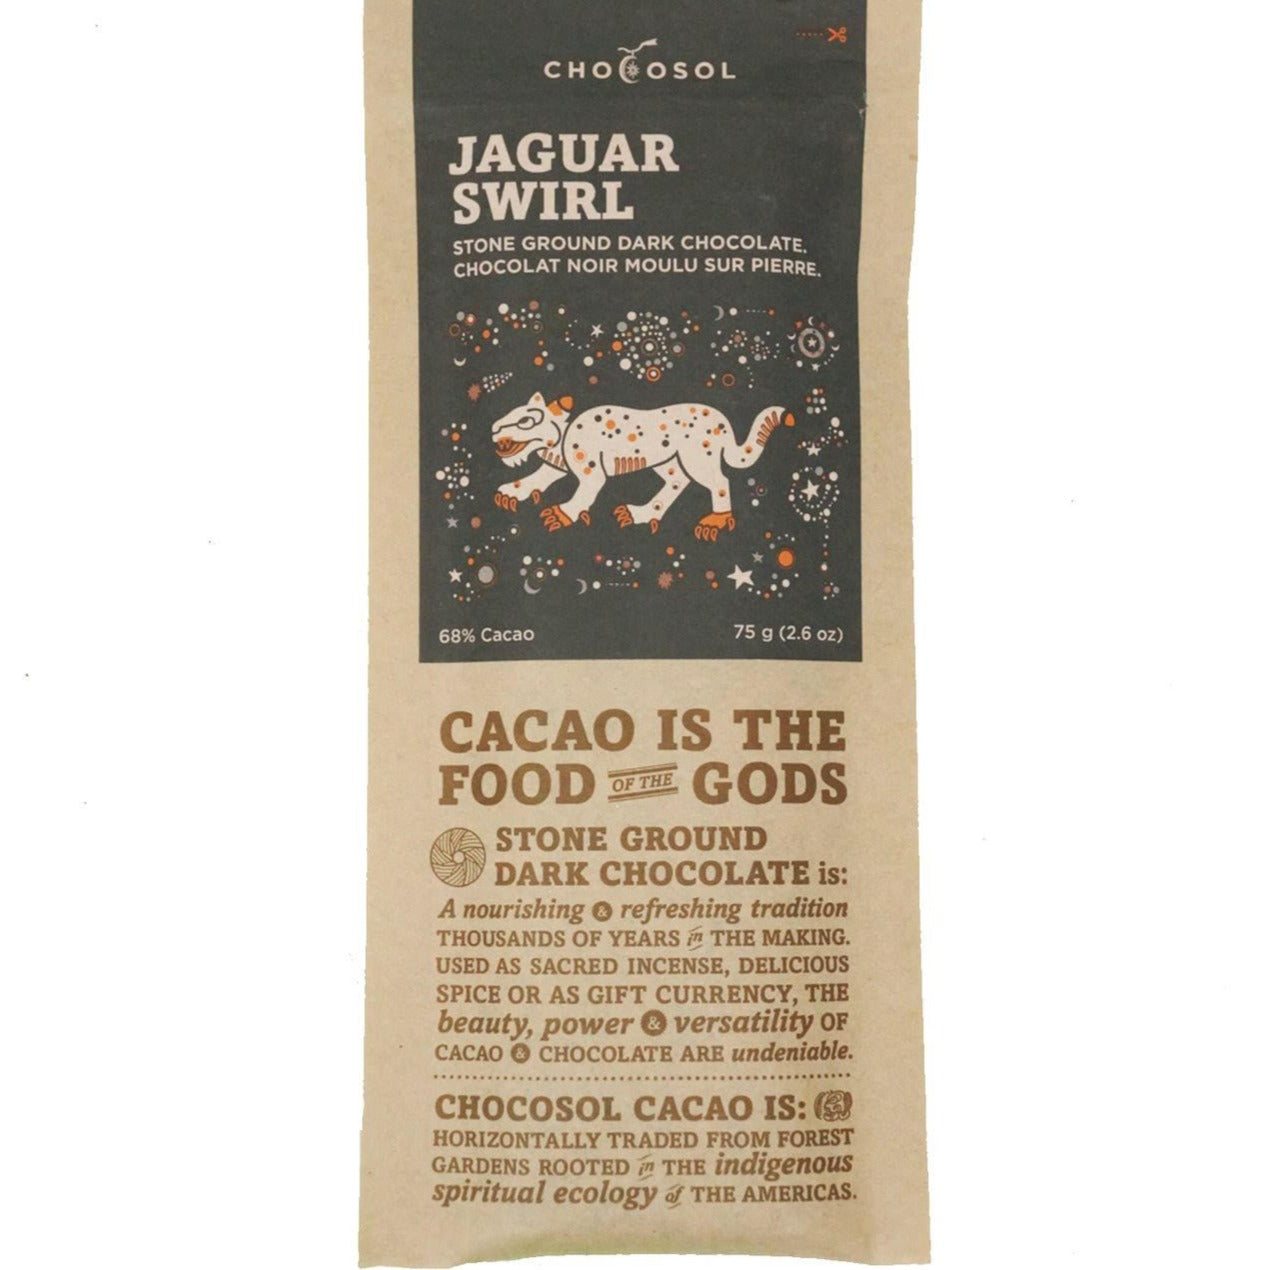 Bag of jaguar swirl chocolate.